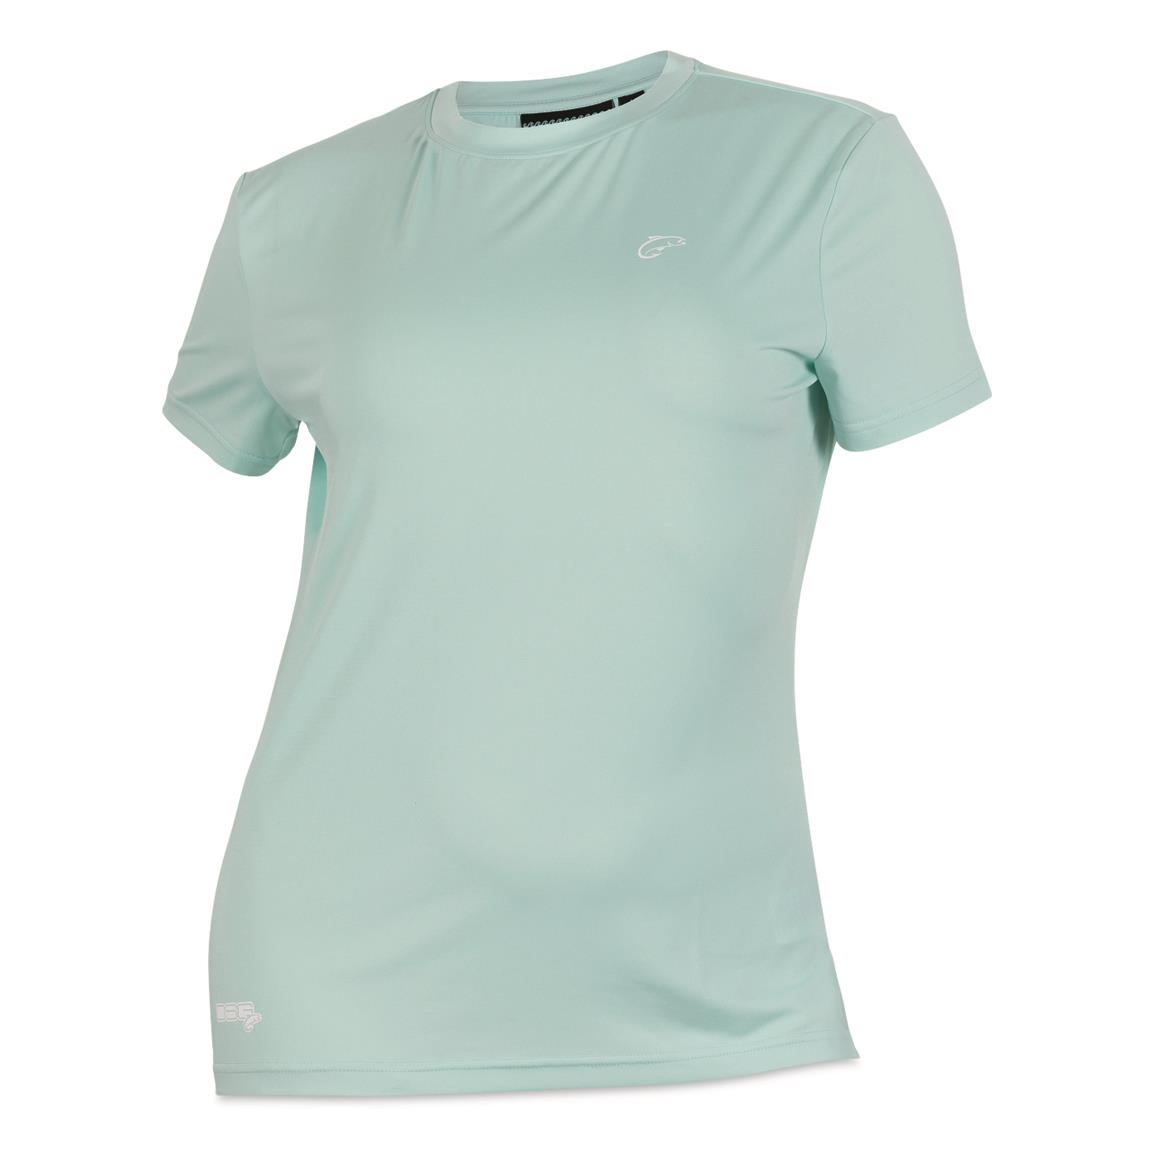 DSG Outerwear Women's Short Sleeve Shirt, Sun Washed Aqua